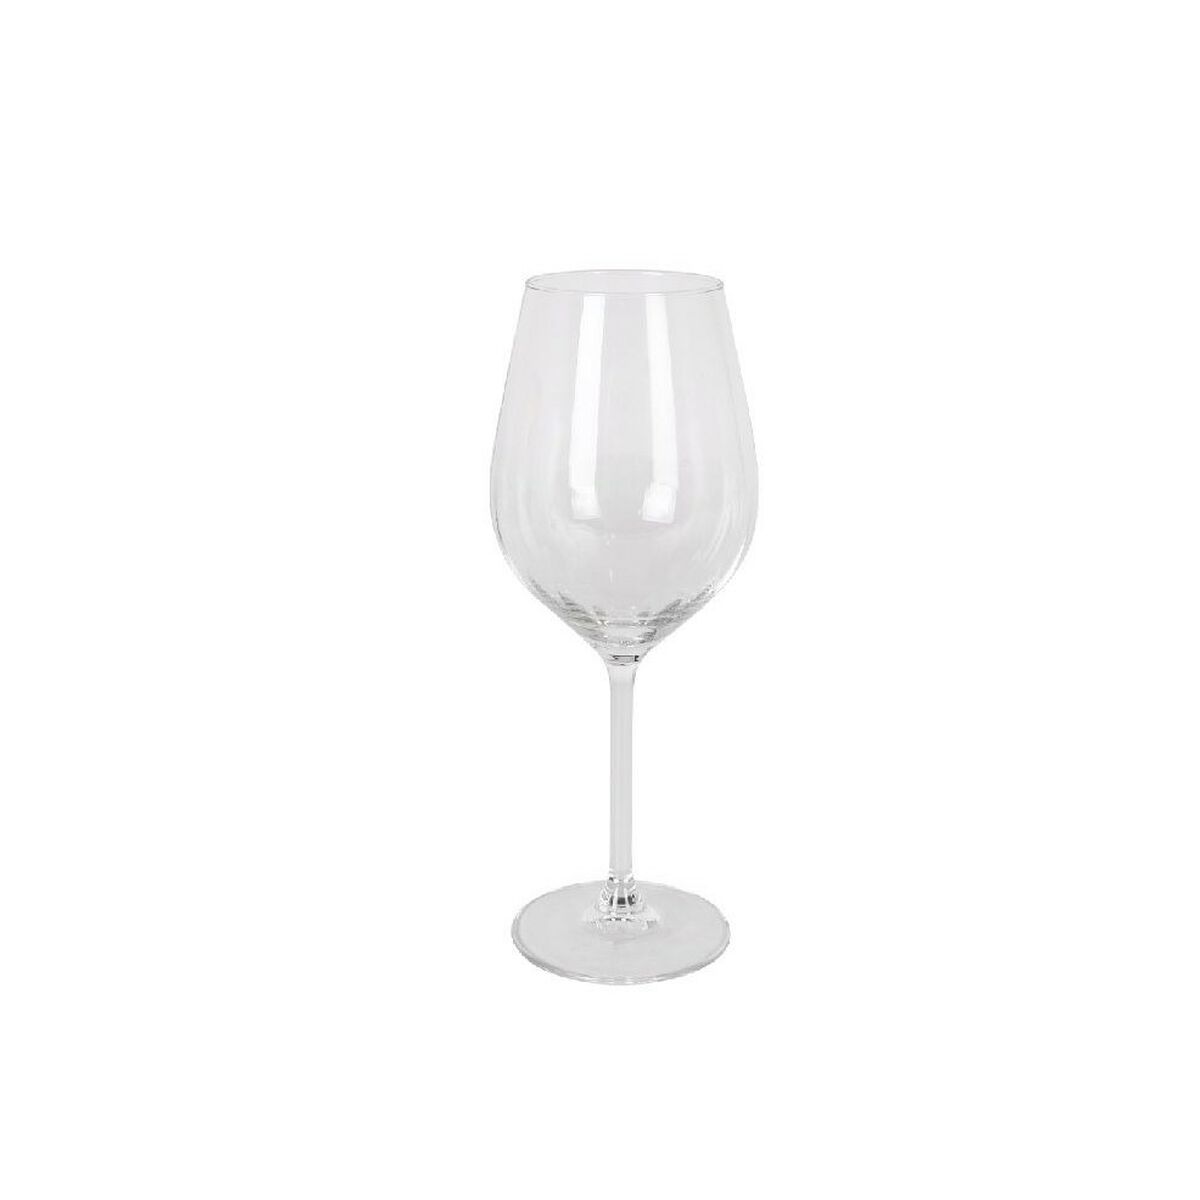 Glasset Royal Leerdam Brocante 500 ml 6 antal